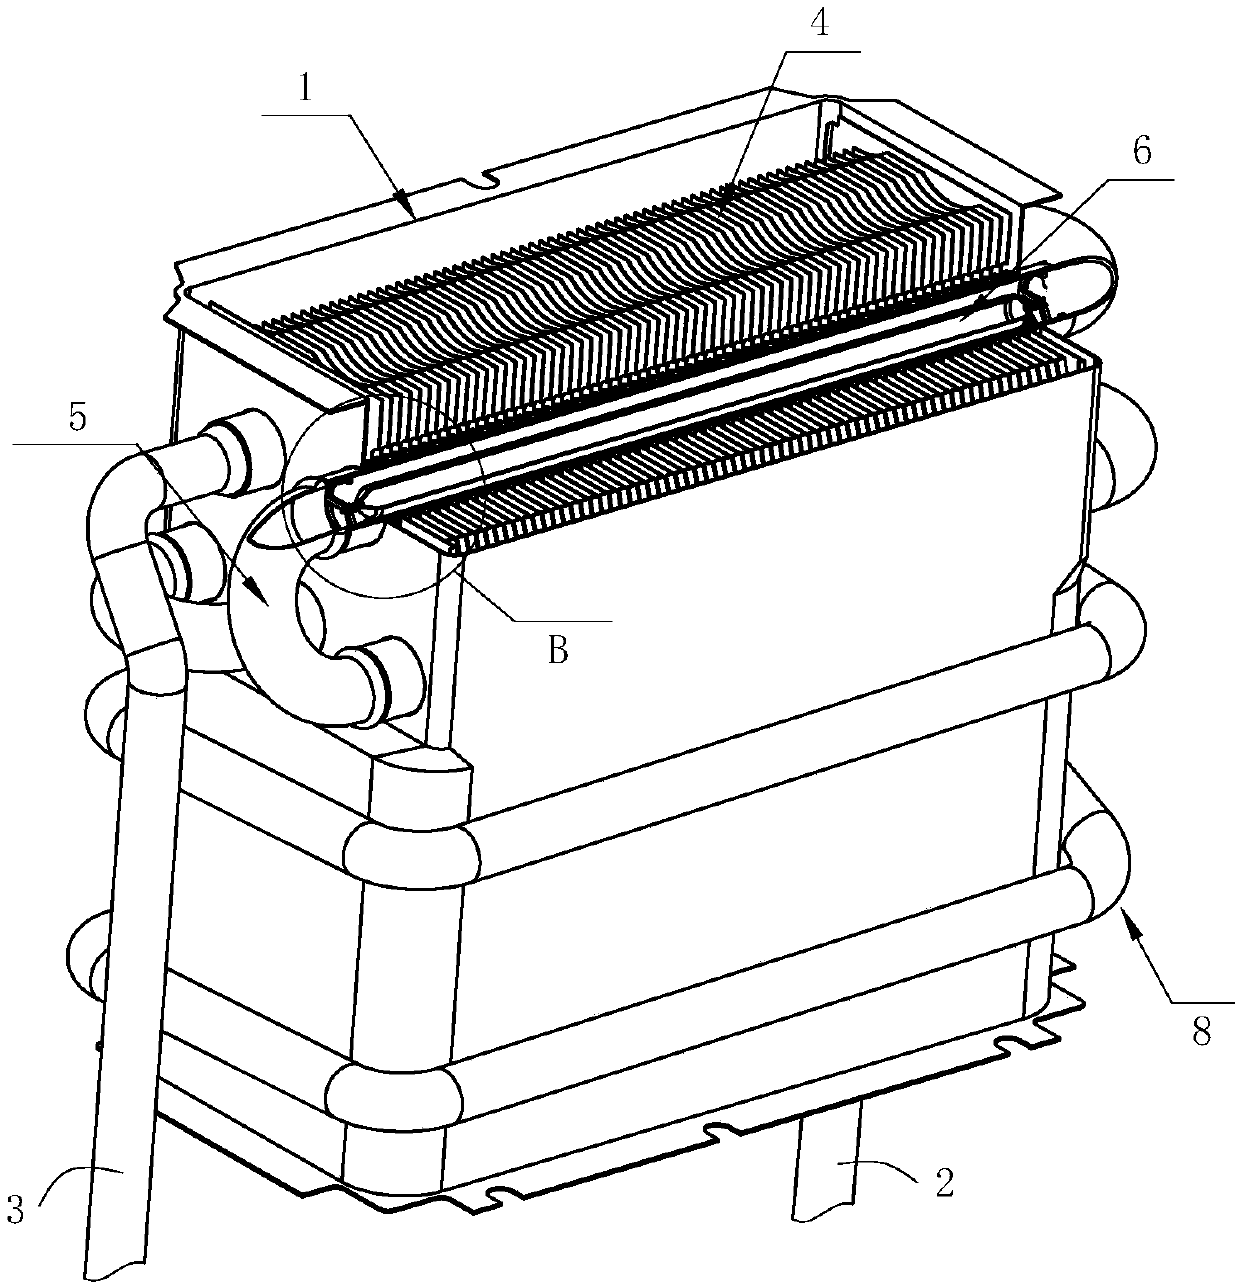 Heat exchanger for gas water heater